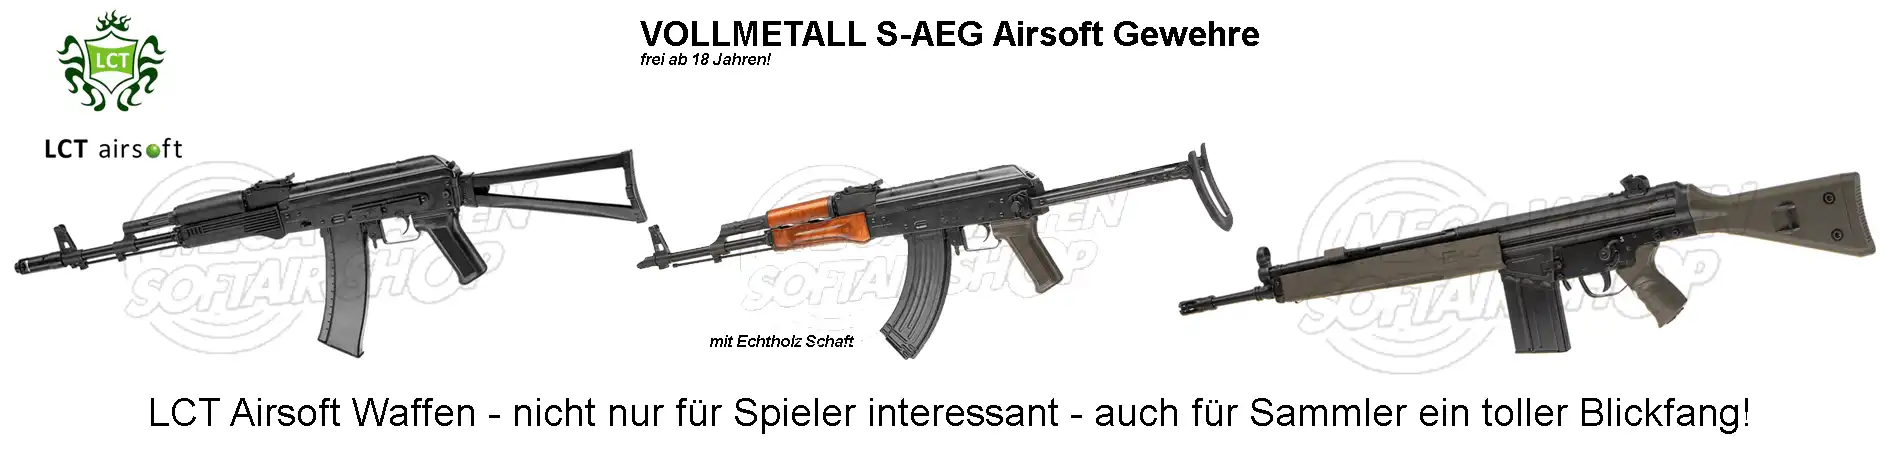 airsoft laden frankfurt Mega Waffen Softair Shop